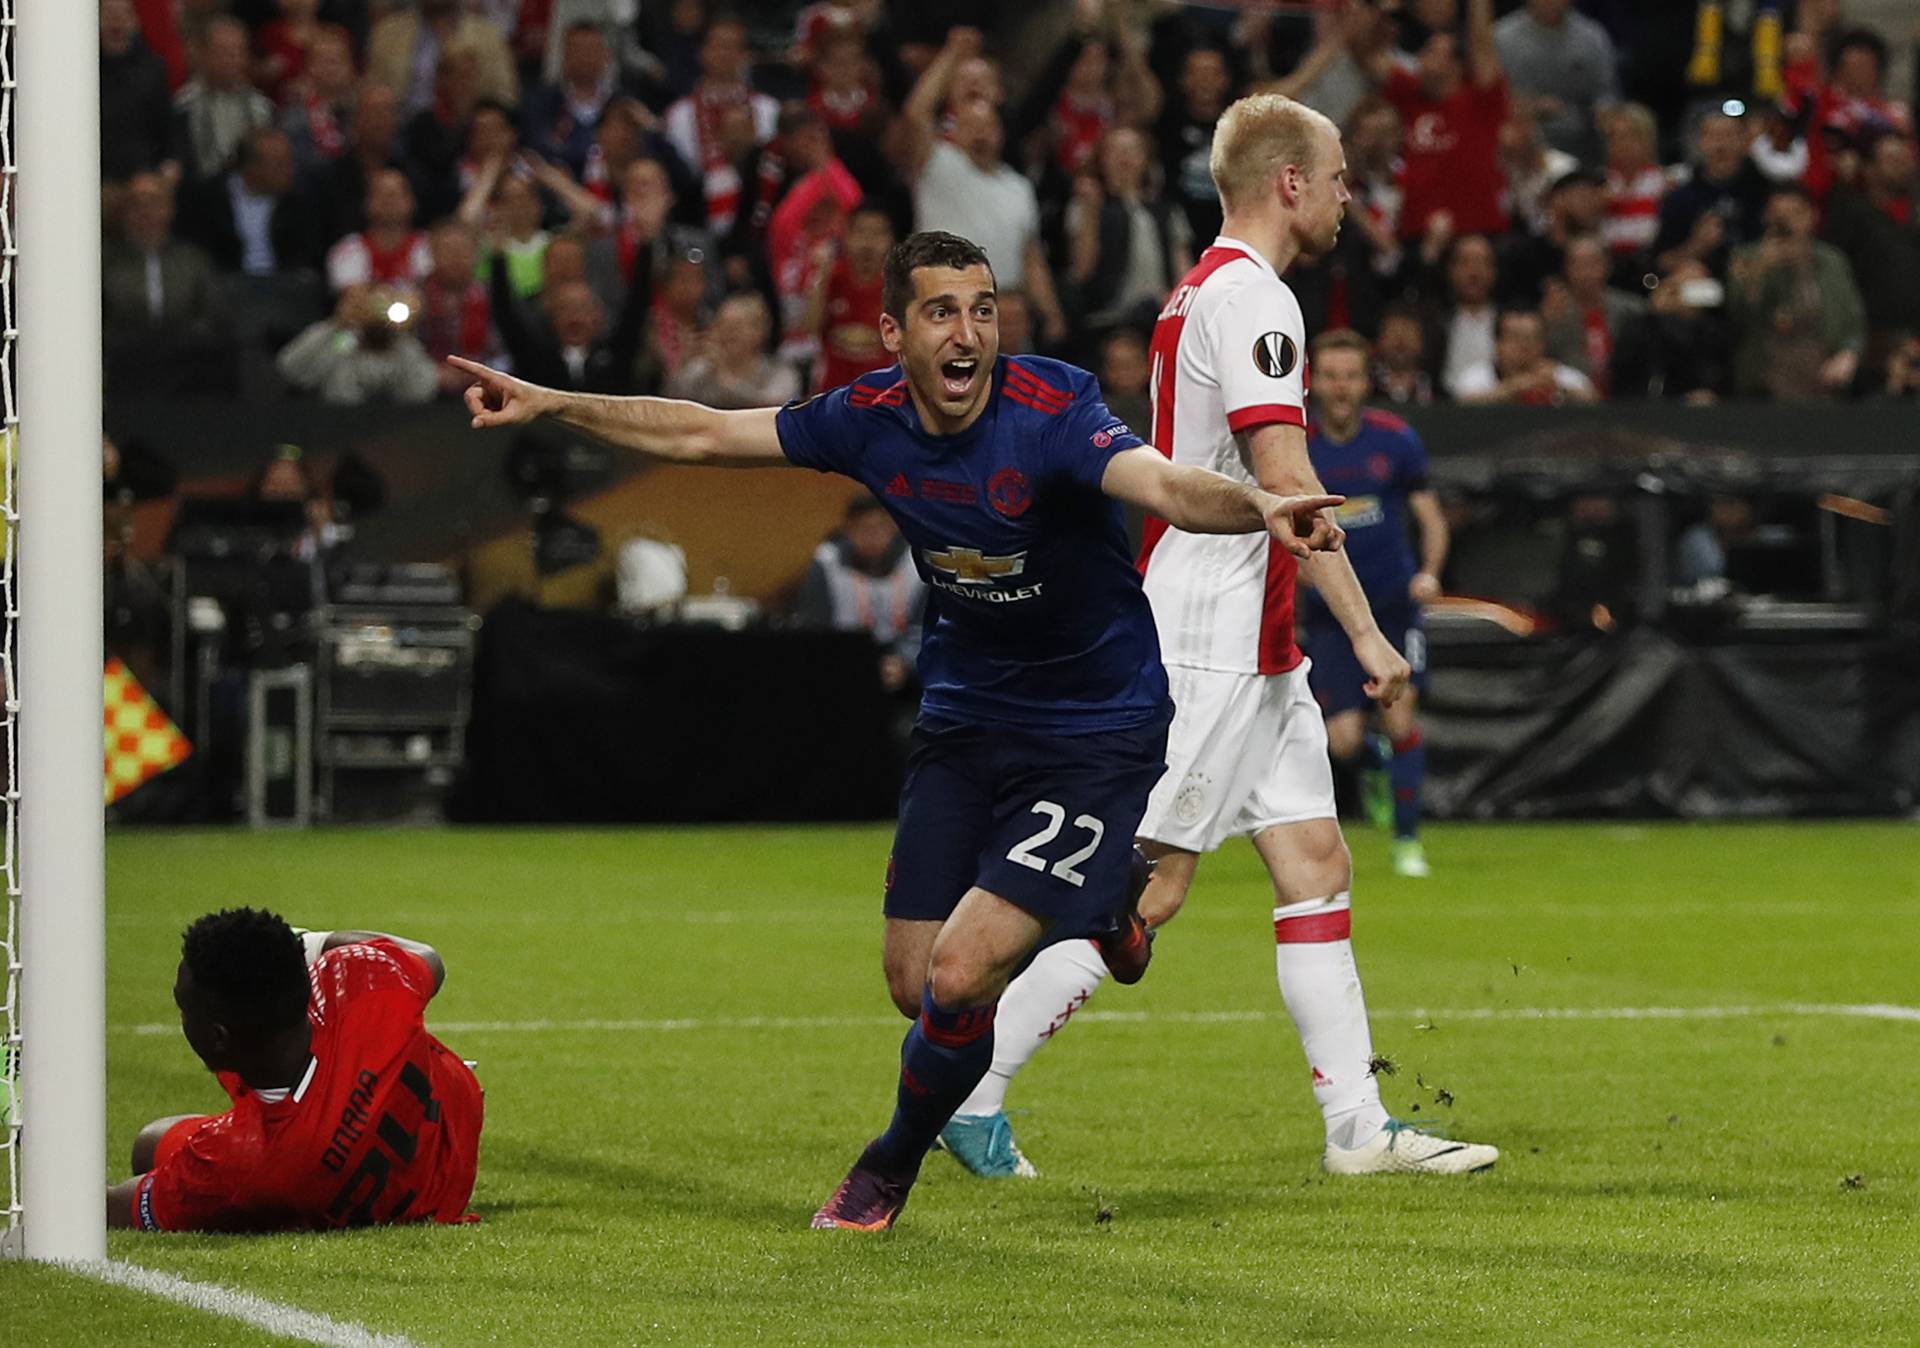 Manchester United's Henrikh Mkhitaryan celebrates scoring their second goal